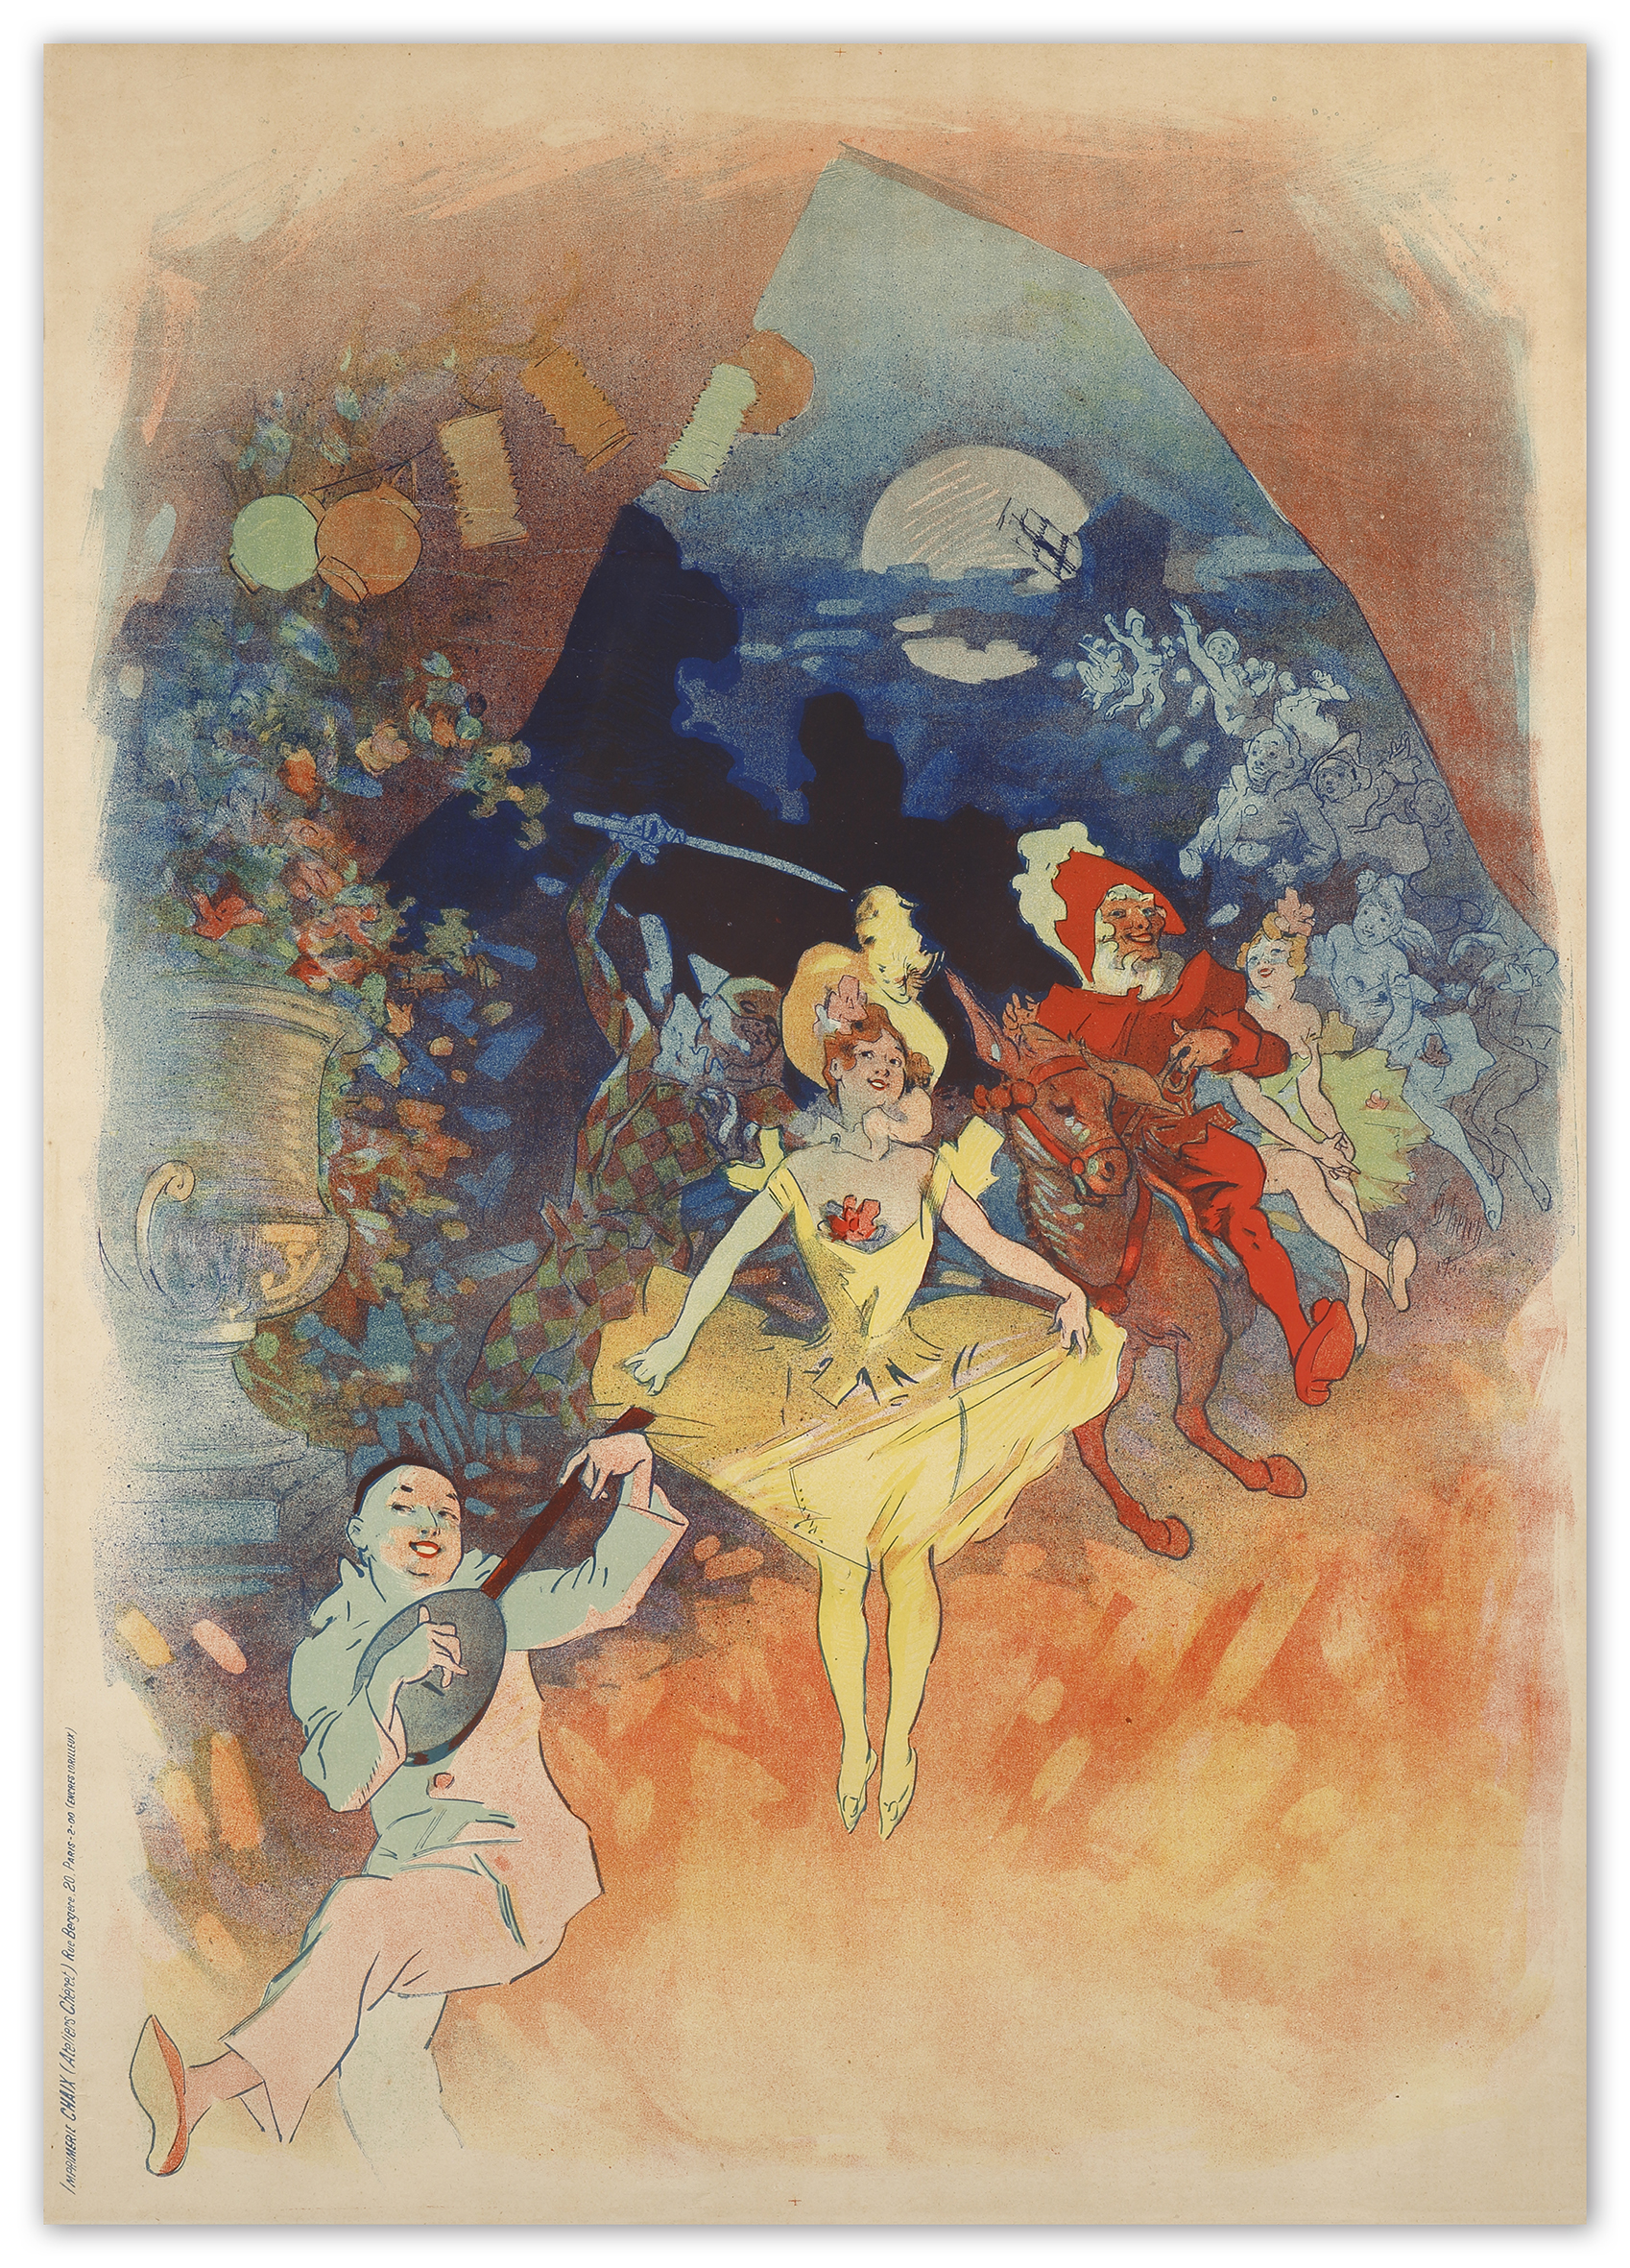 [Wall size poster] Musée Grevin, Théatre les Fantoches de John Hewelt - Antique Print from 1900